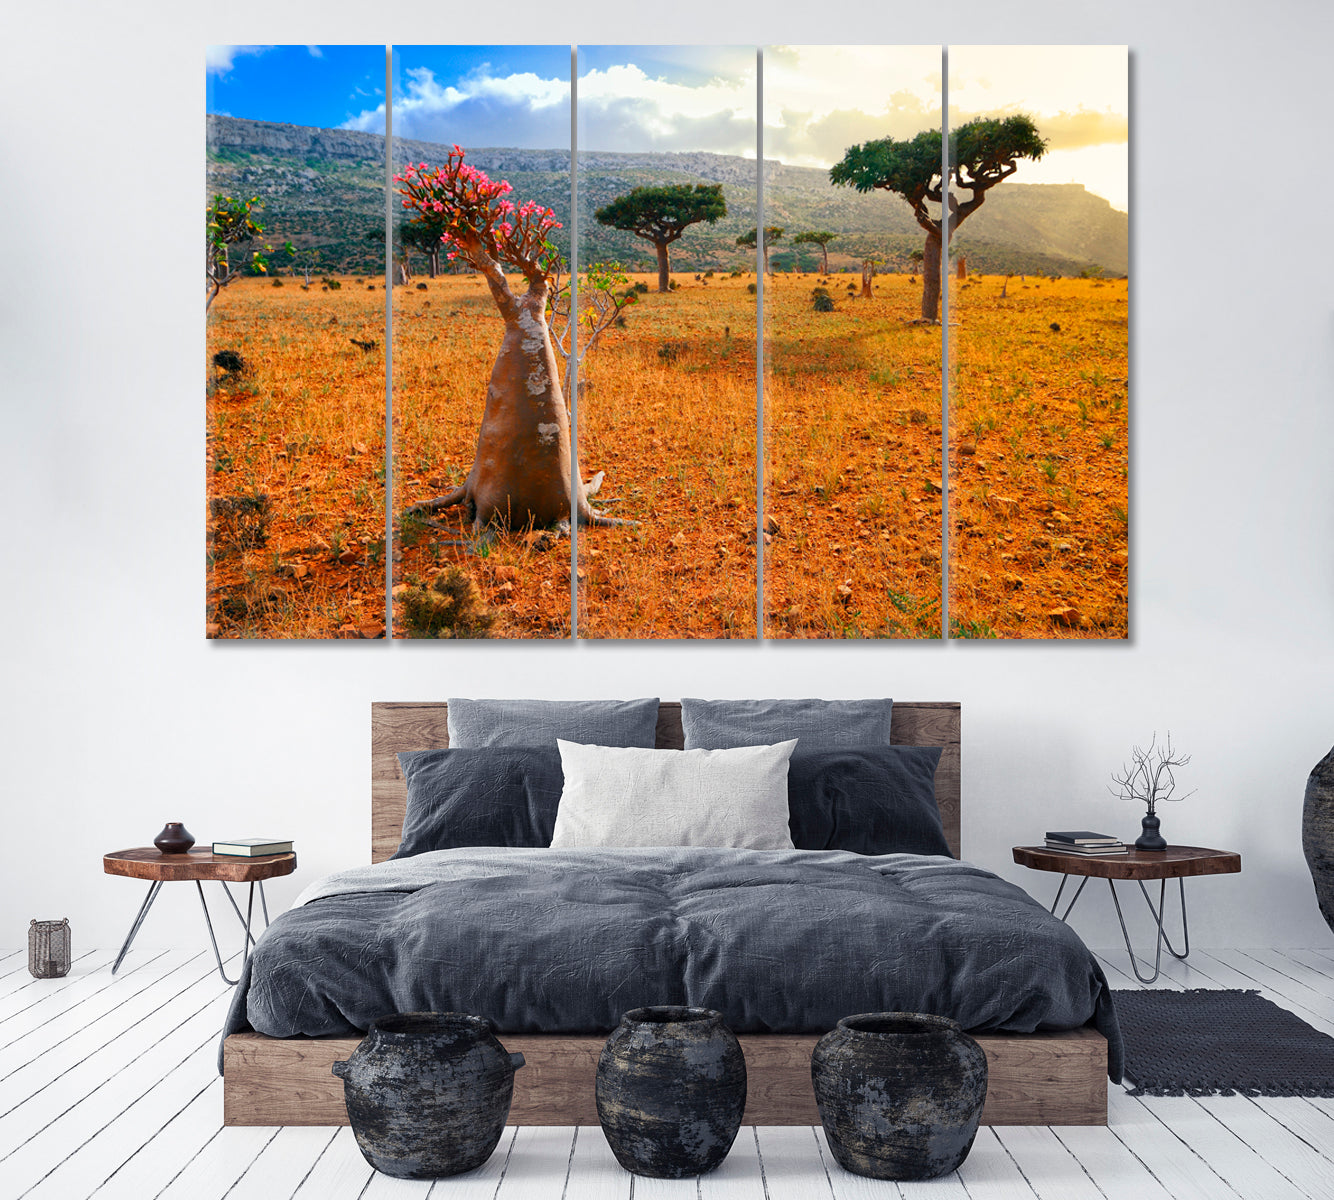 Flowering Bottle Trees (Desert Rose) Socotra Yemen Canvas Print ArtLexy 5 Panels 36"x24" inches 